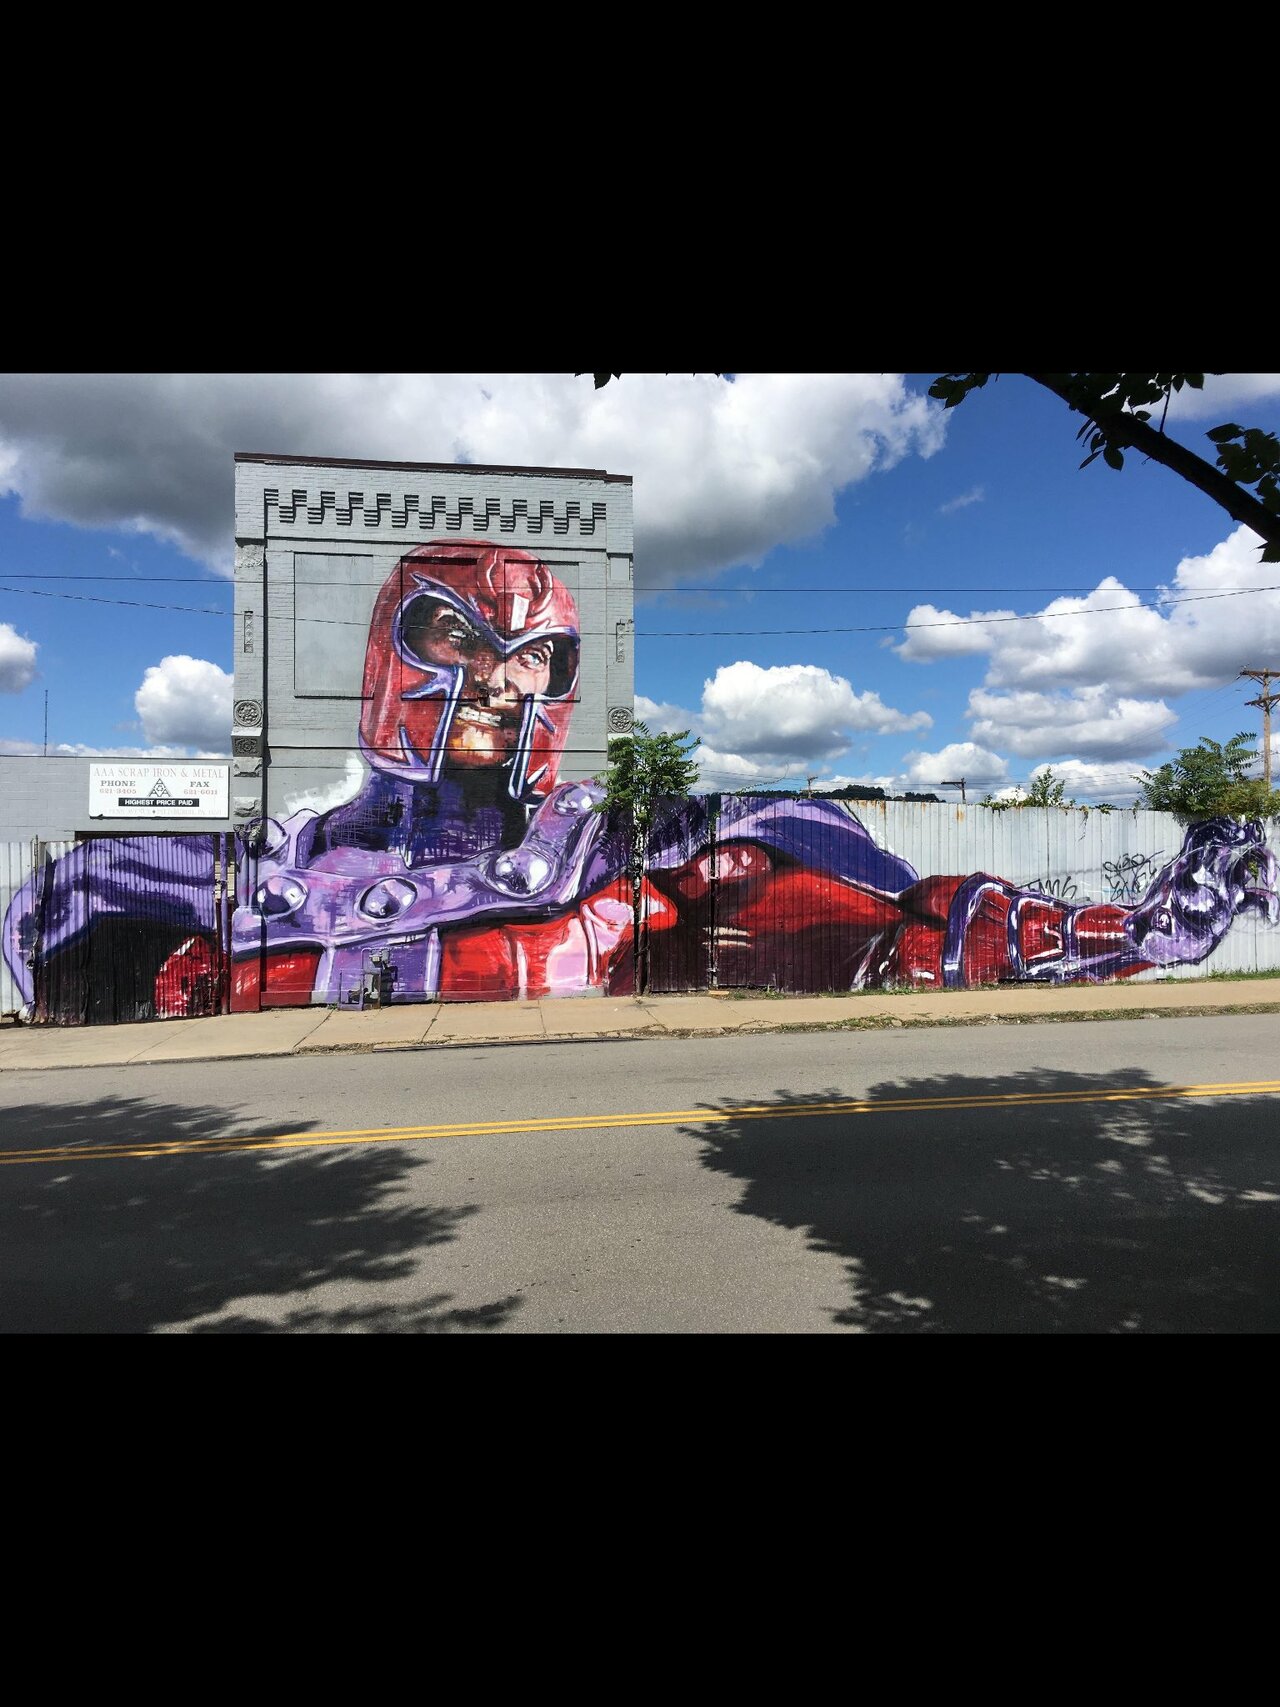 Magneto mural idk the artist#StreetArt #mural #graffiti #art https://t.co/3mifgavlP2